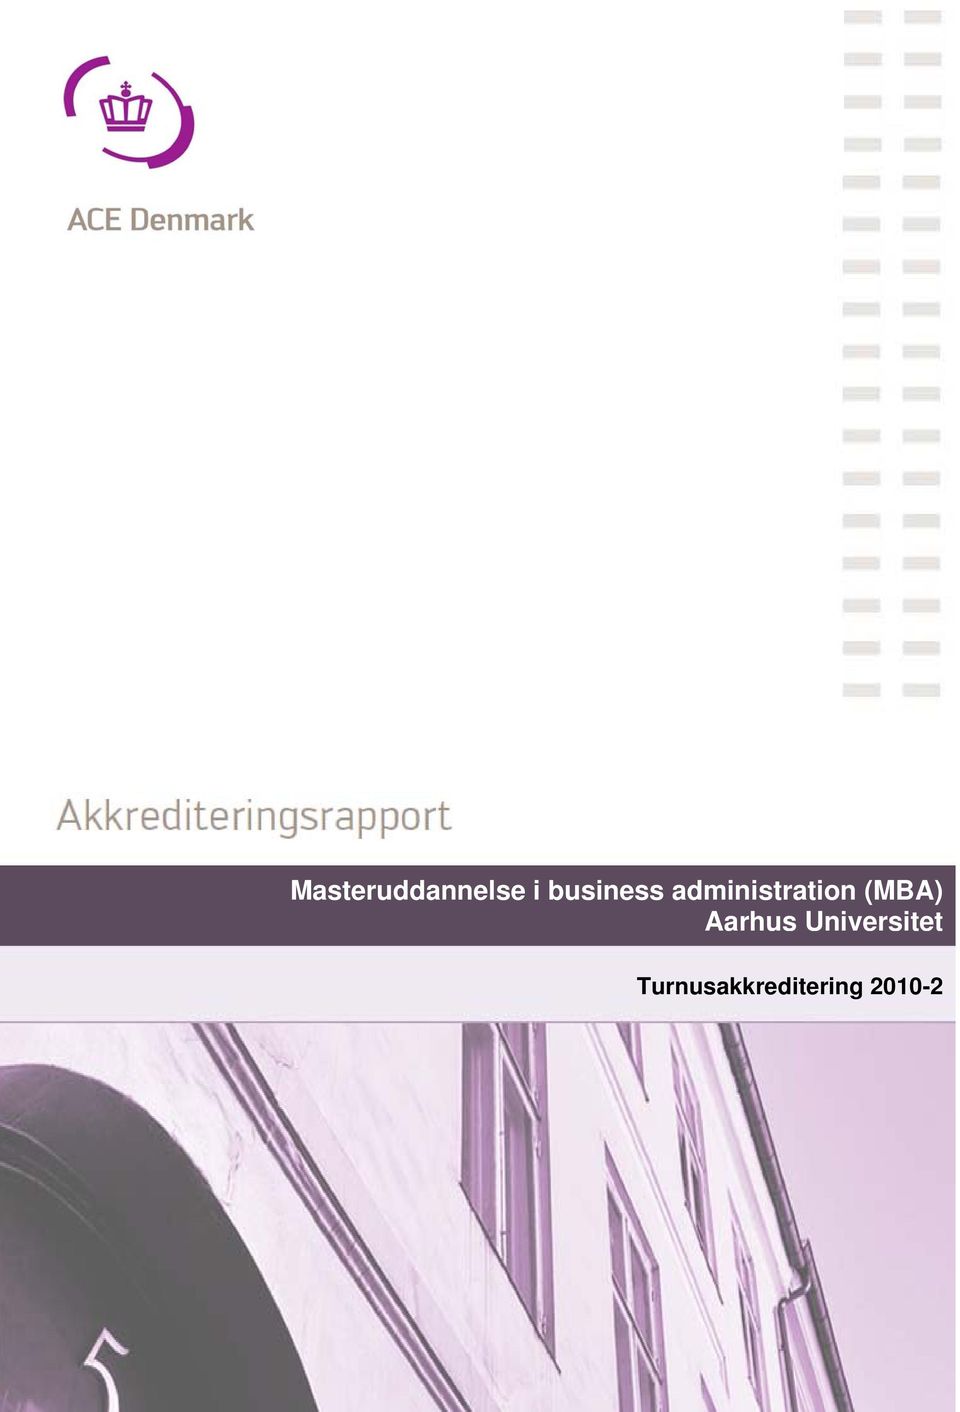 (MBA) Aarhus